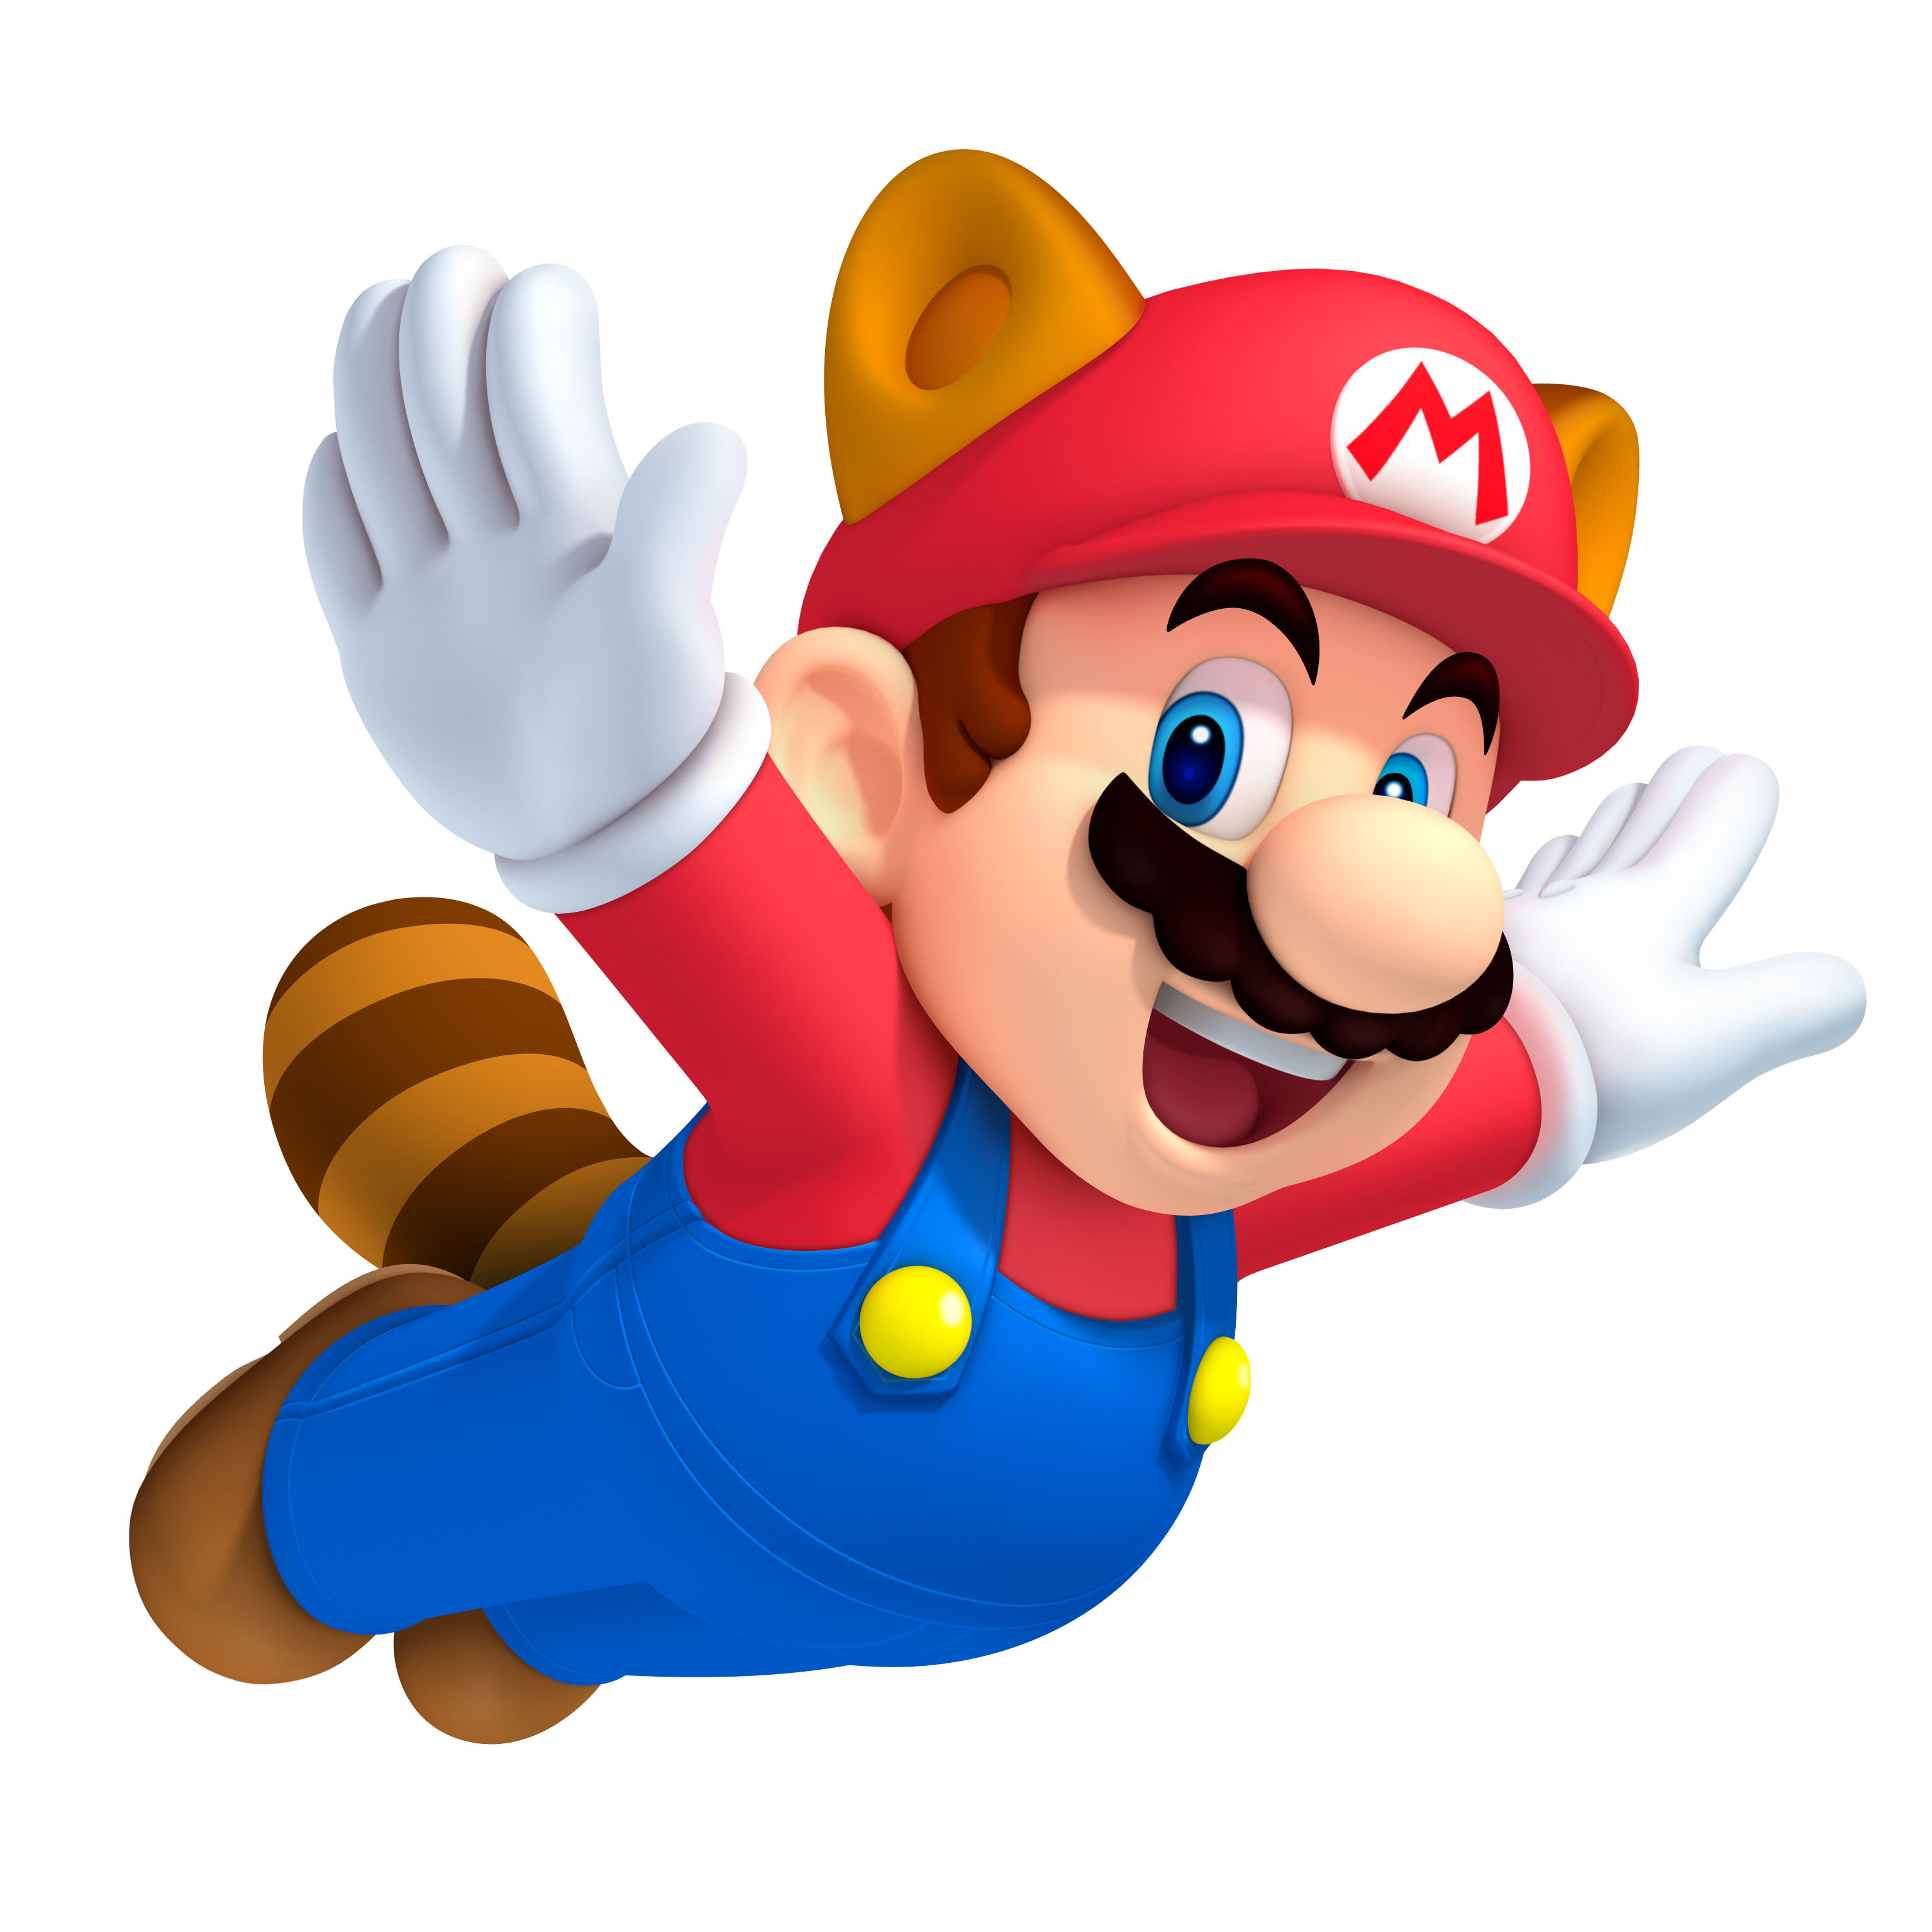 Mario new life. Супер Марио. Супер Марио БРОС. Супер Марио БРОС Марио. Марио персонажи.